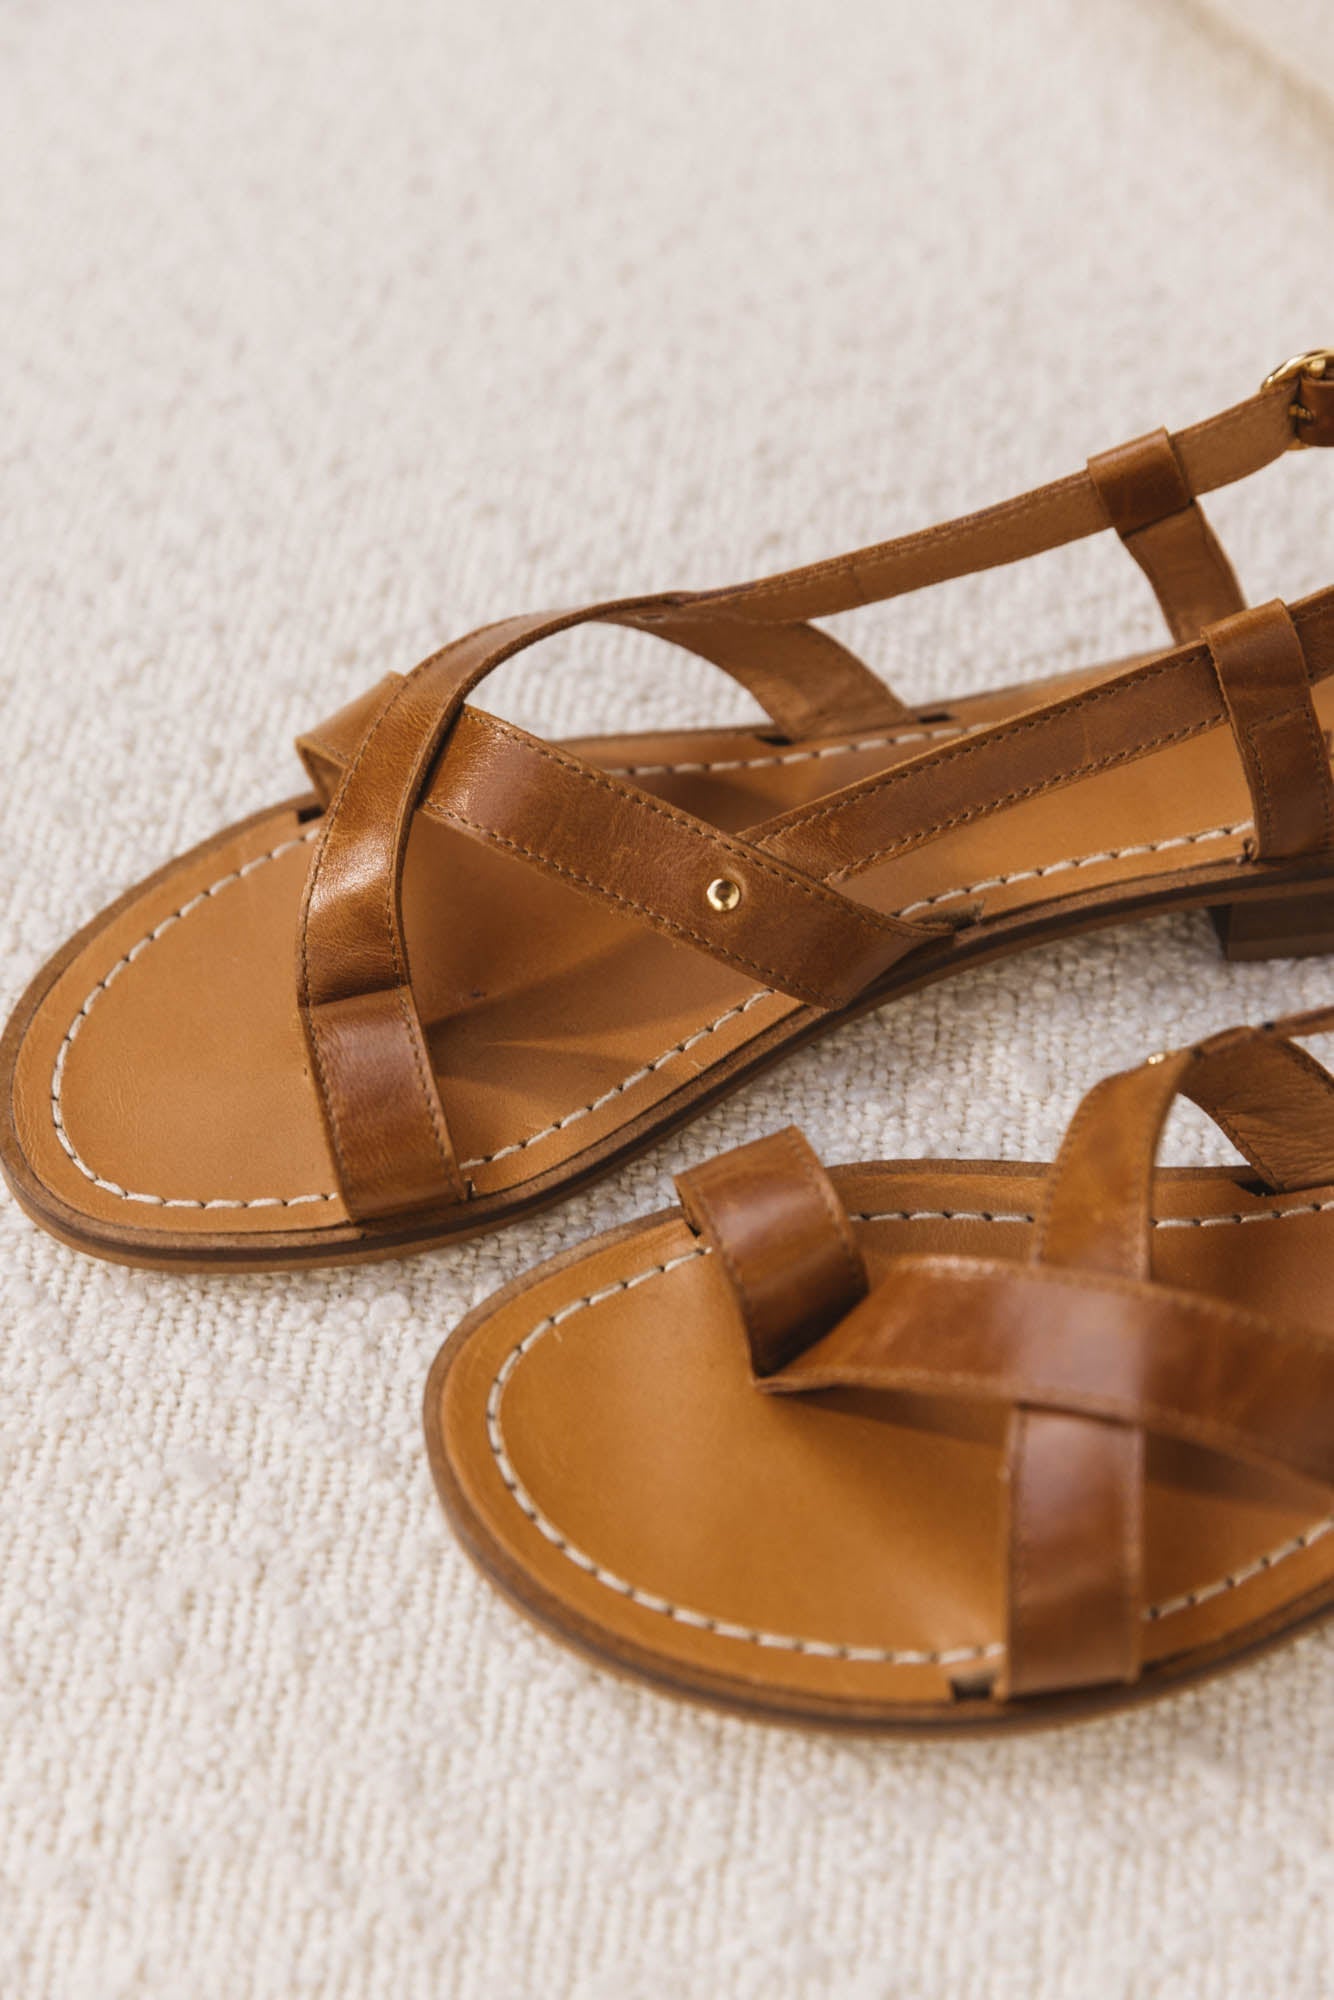 Camel heather sandals